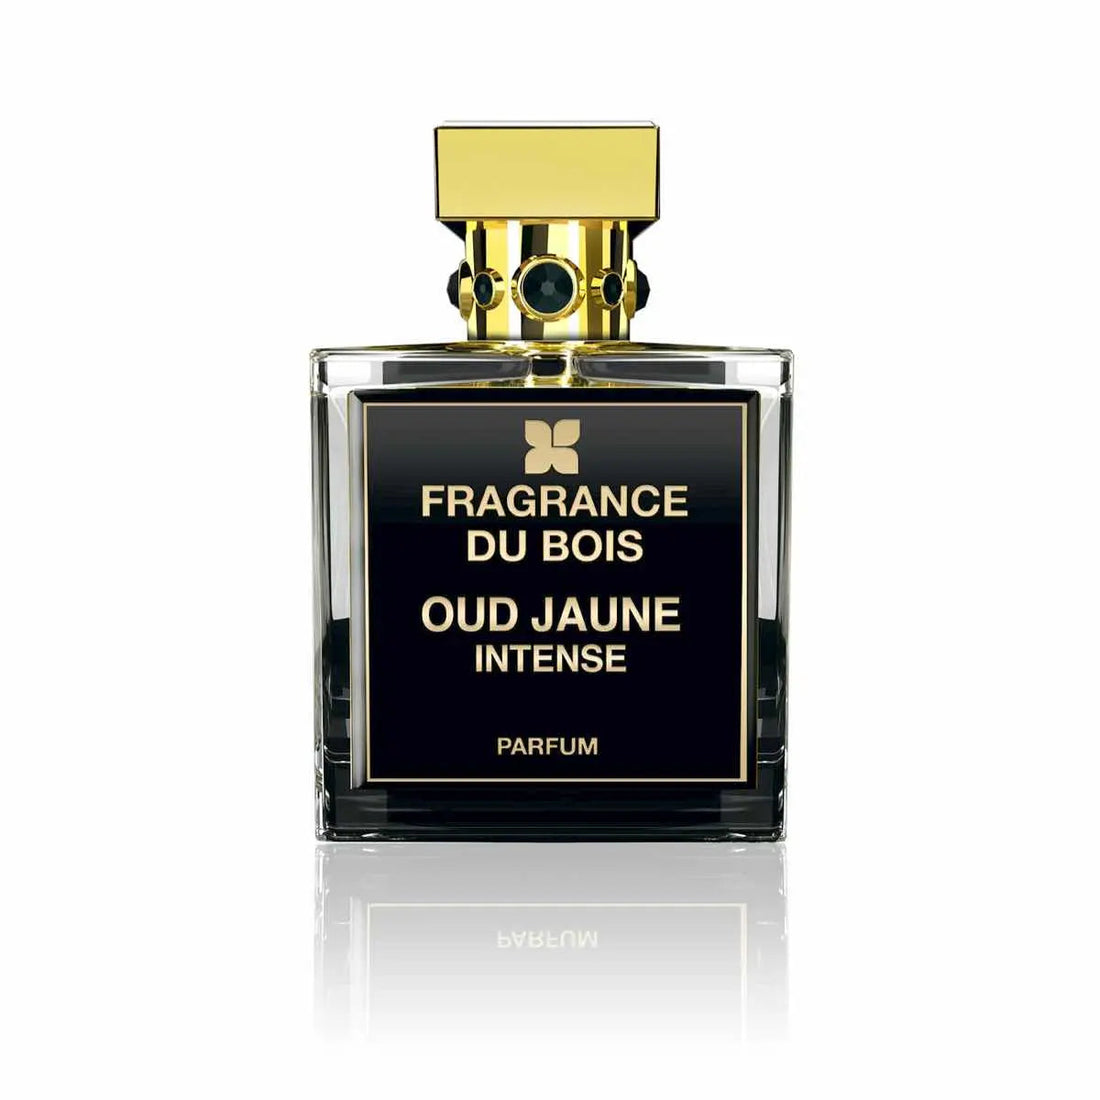 Fragrance du bois Oud Jaune 香水 - 100 毫升